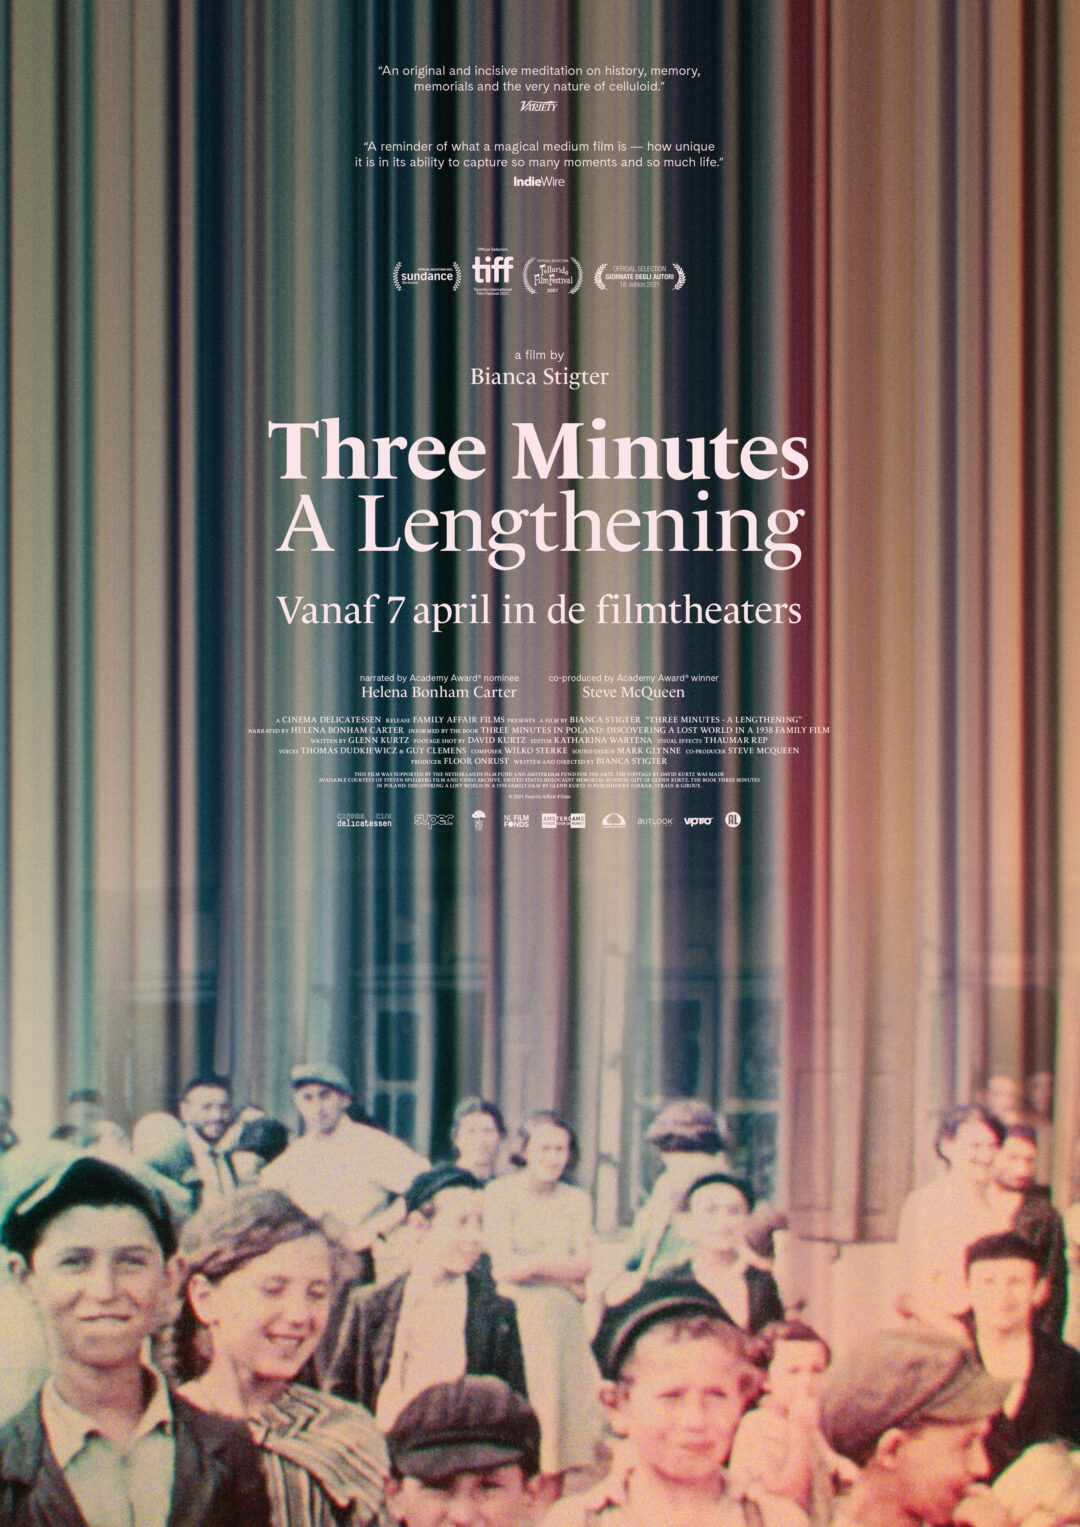 Three-Minutes-A-Lengthening_ps_1_jpg_sd-high_Copyright-US-Holocaust-Memorial-Museum.jpg